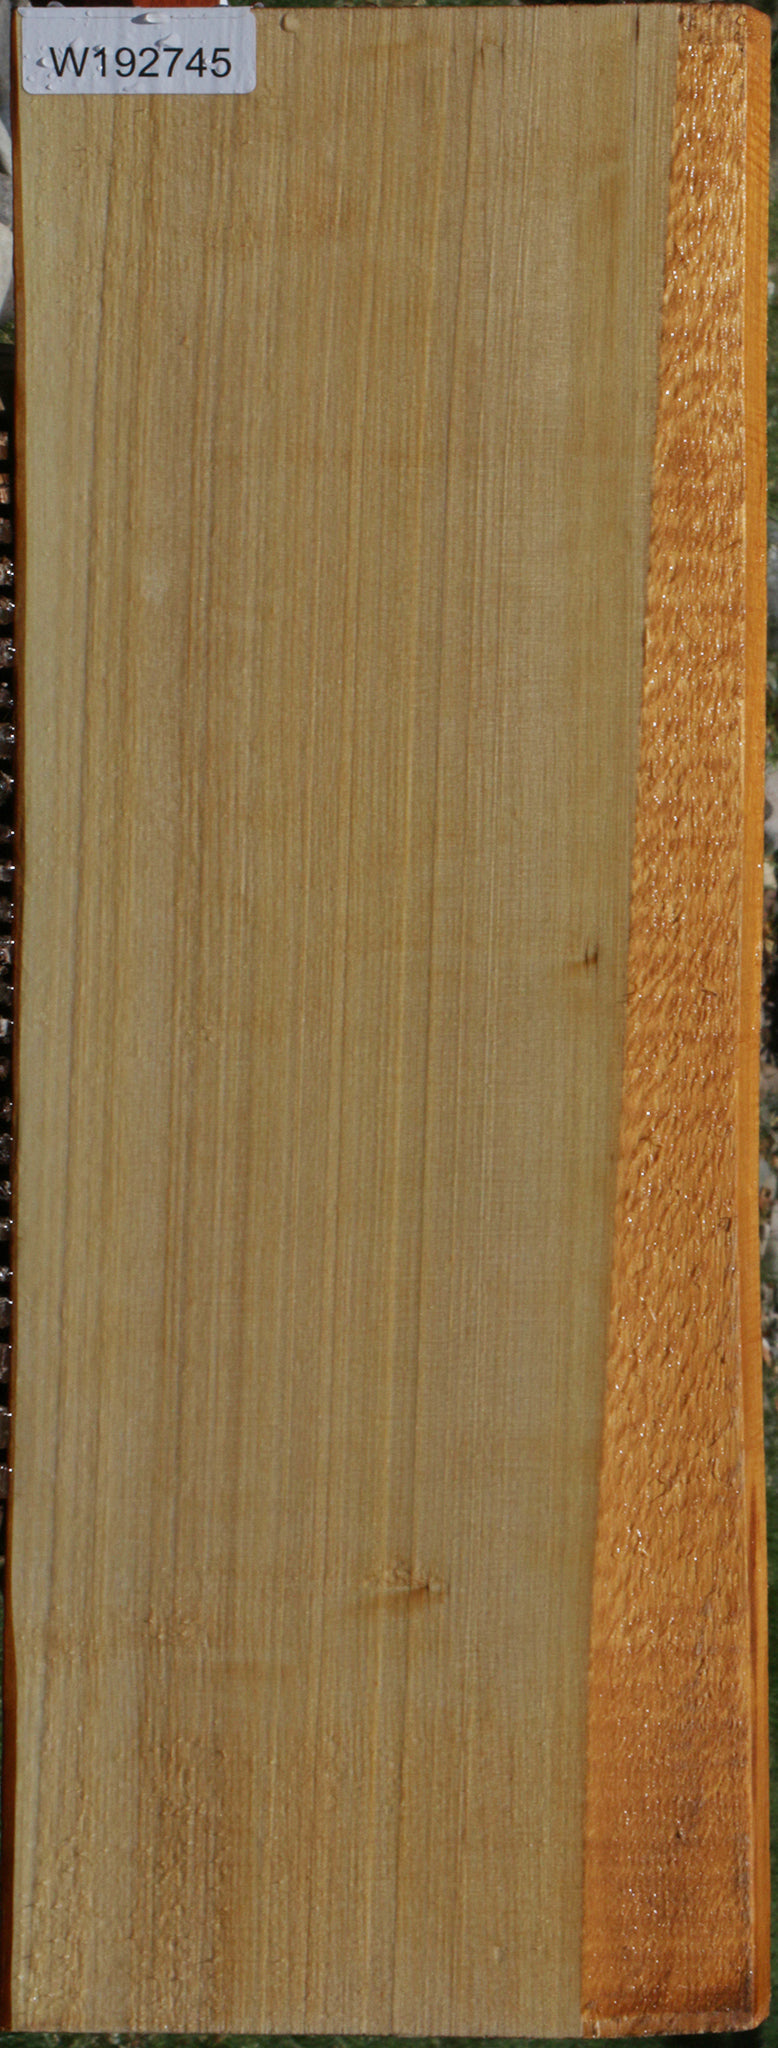 Port Orford Cedar Live Edge Instrument Lumber